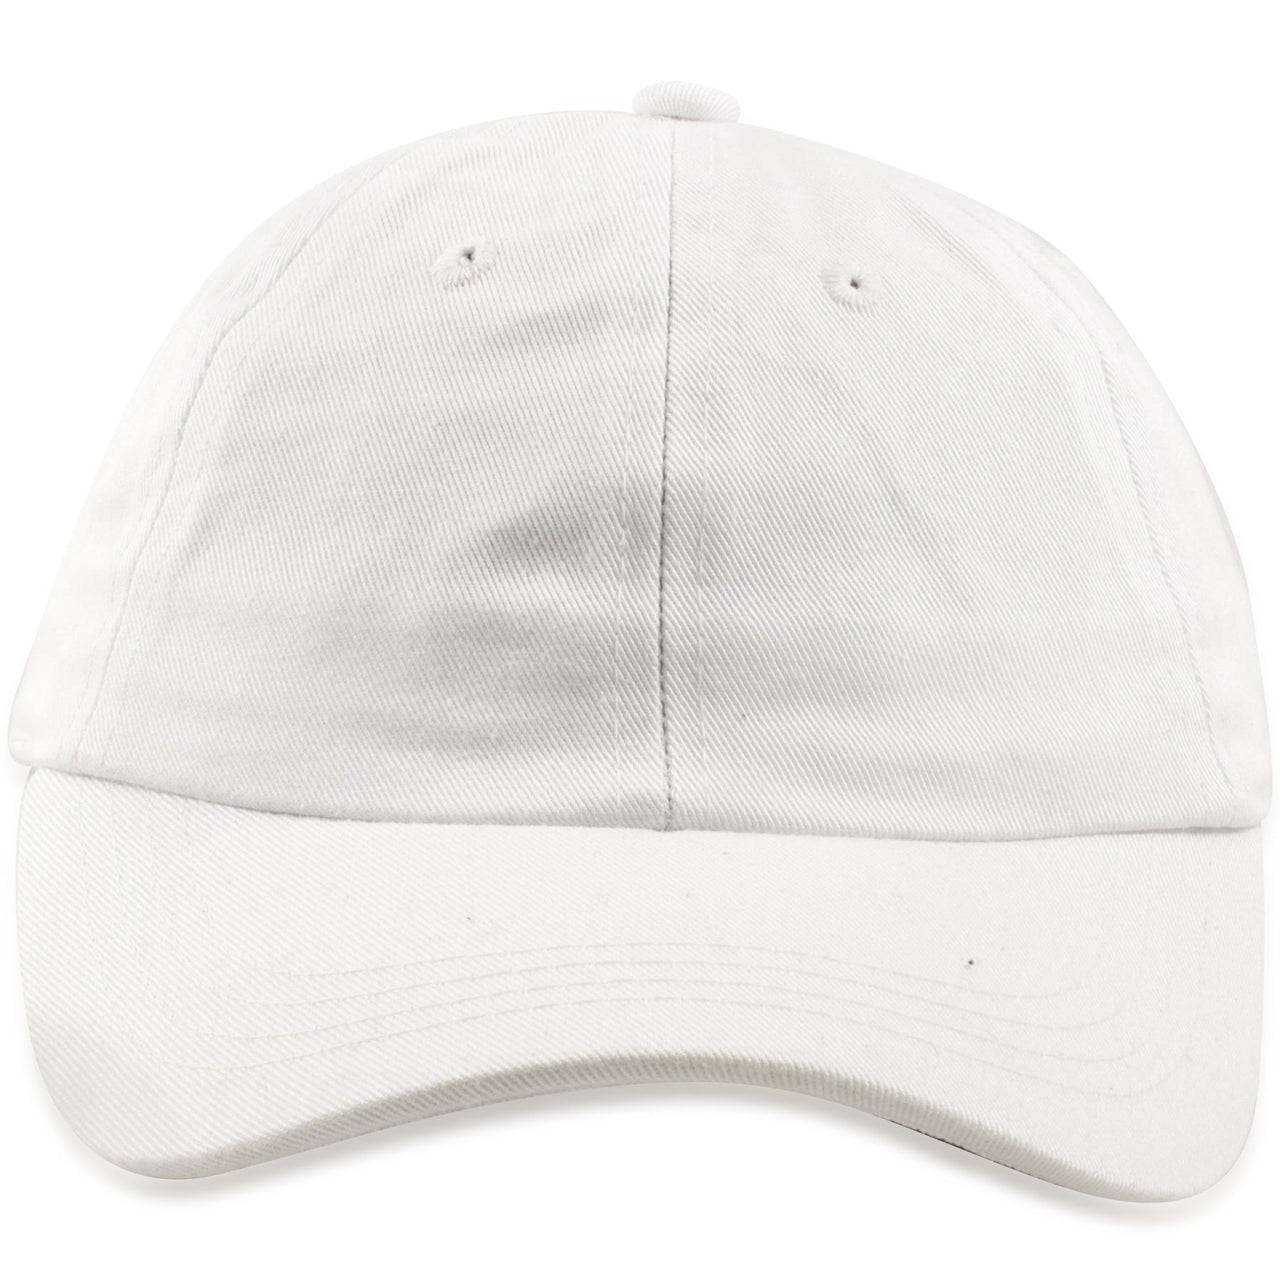 Blank White Kids Sized Adjustable Baseball Cap